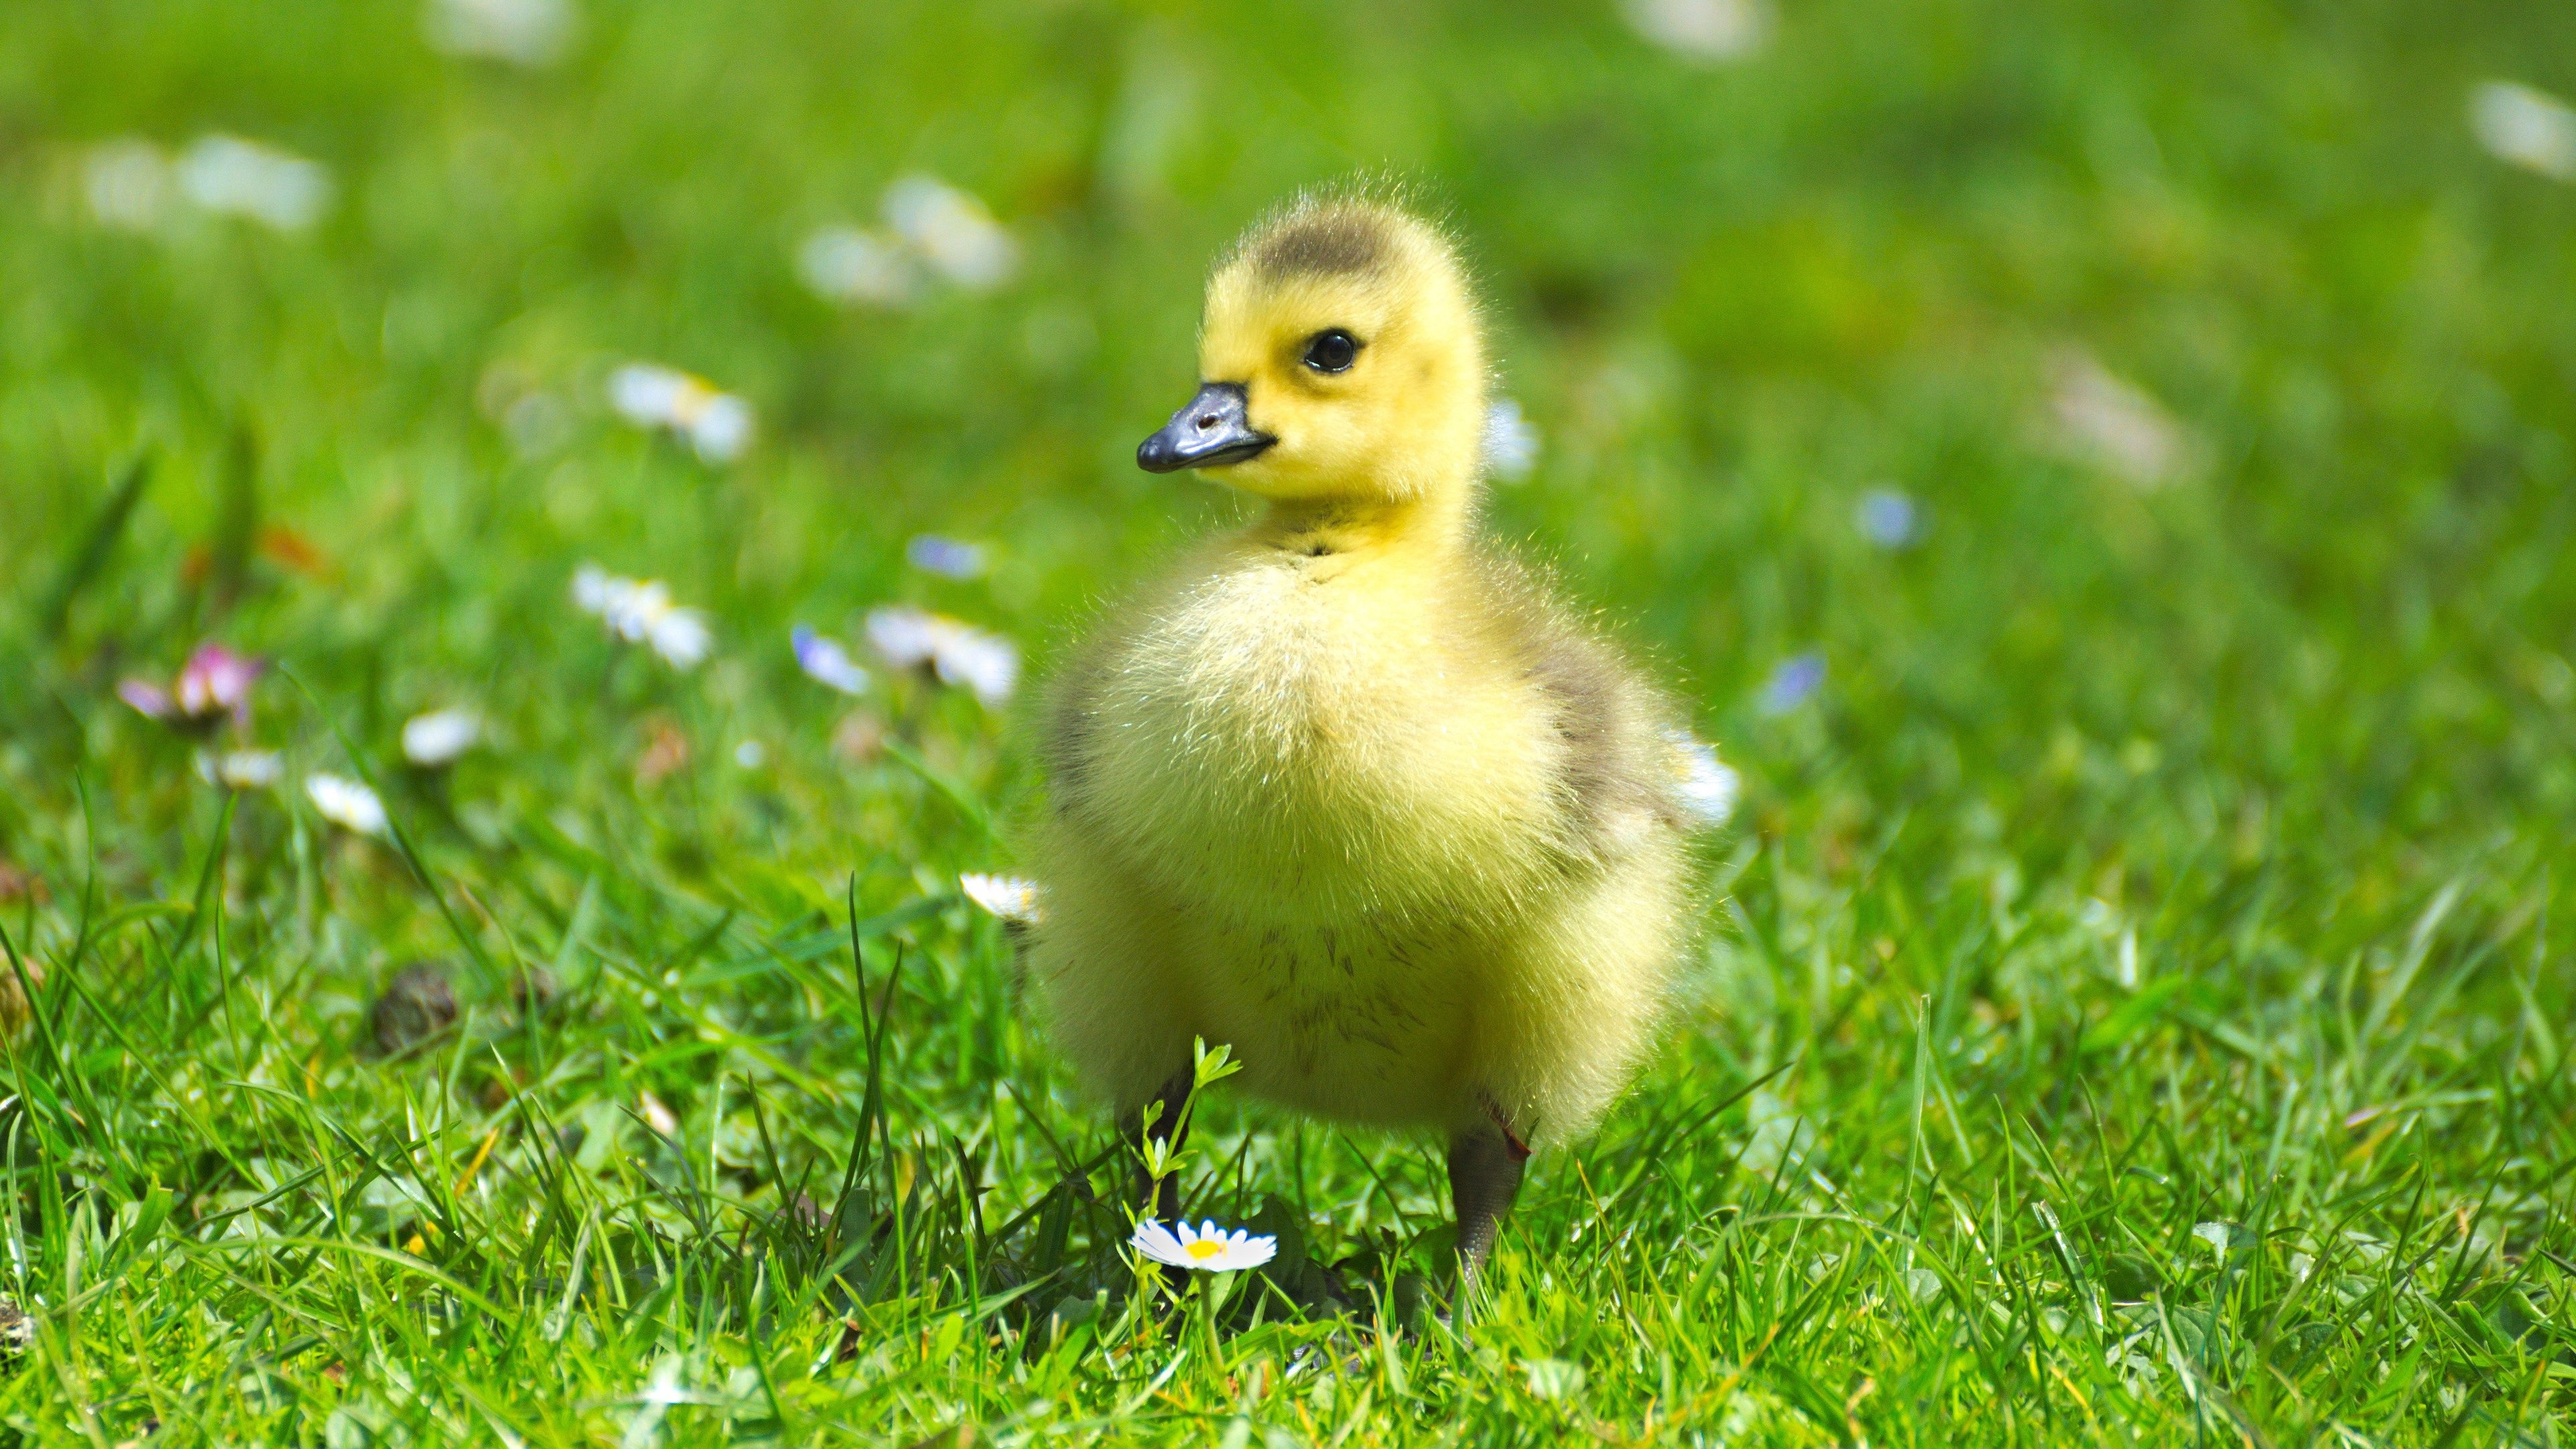 Cute baby goose, Grassland habitat, Animal wallpaper, Adorable bird, 3840x2160 4K Desktop